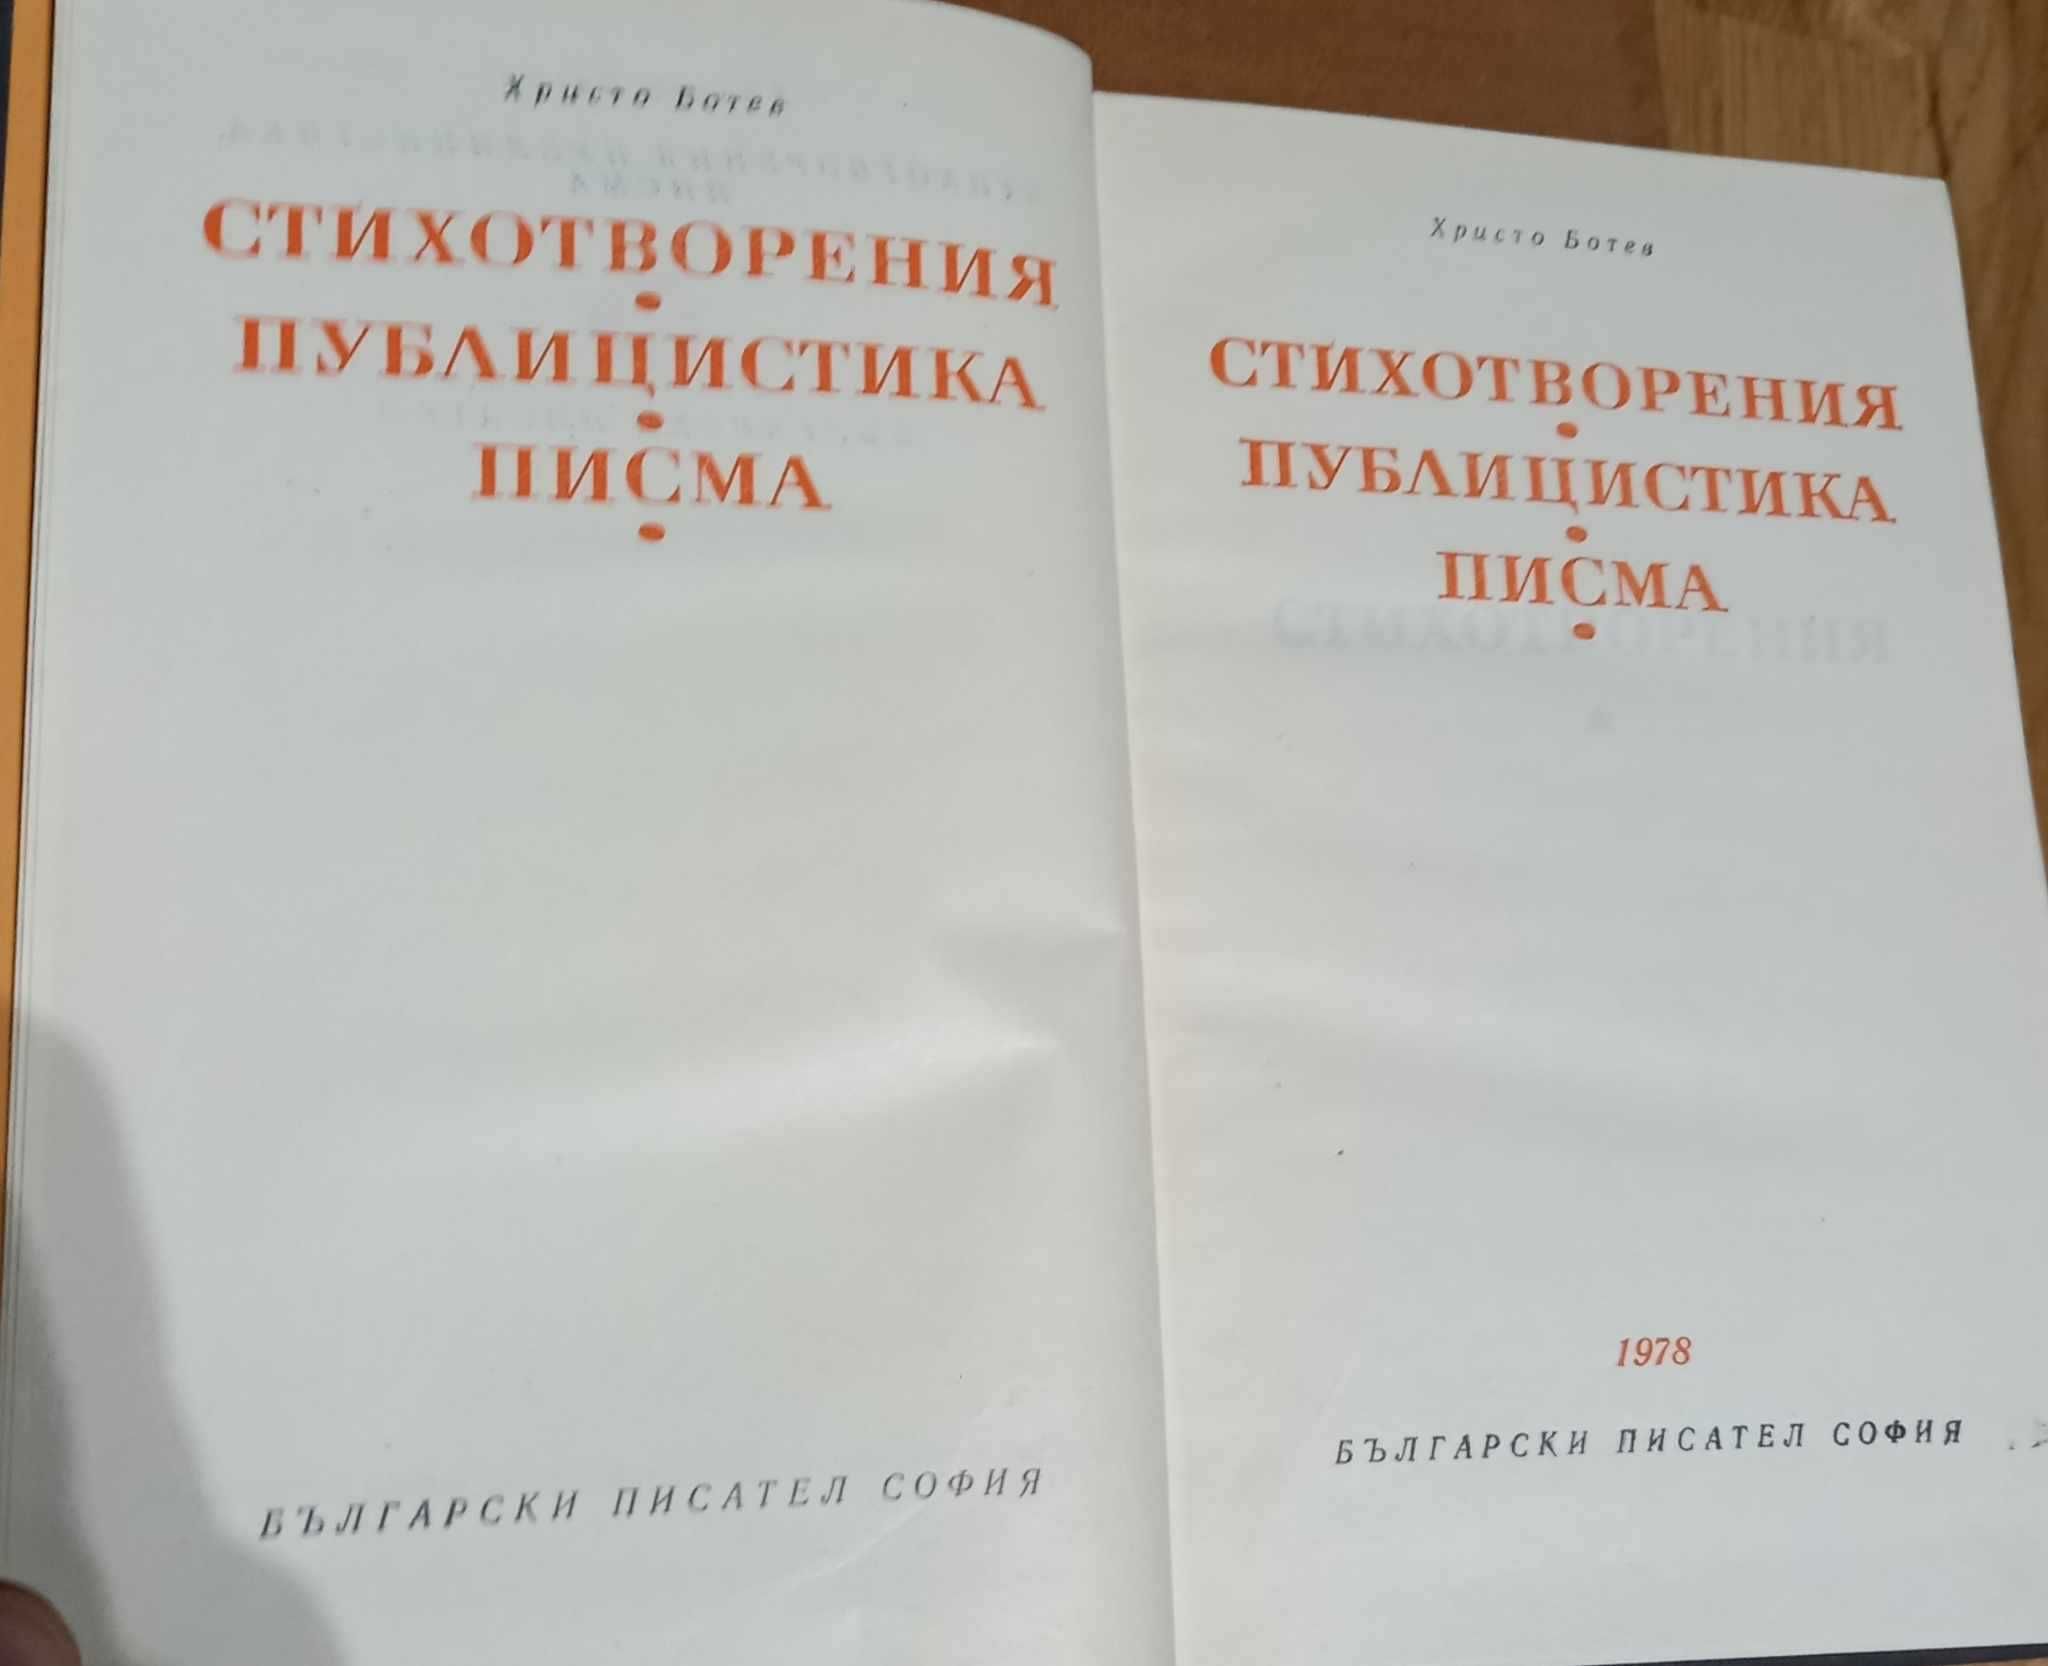 Христо Ботев - "Живот и дело" + Стихотворения, публицистика и писма